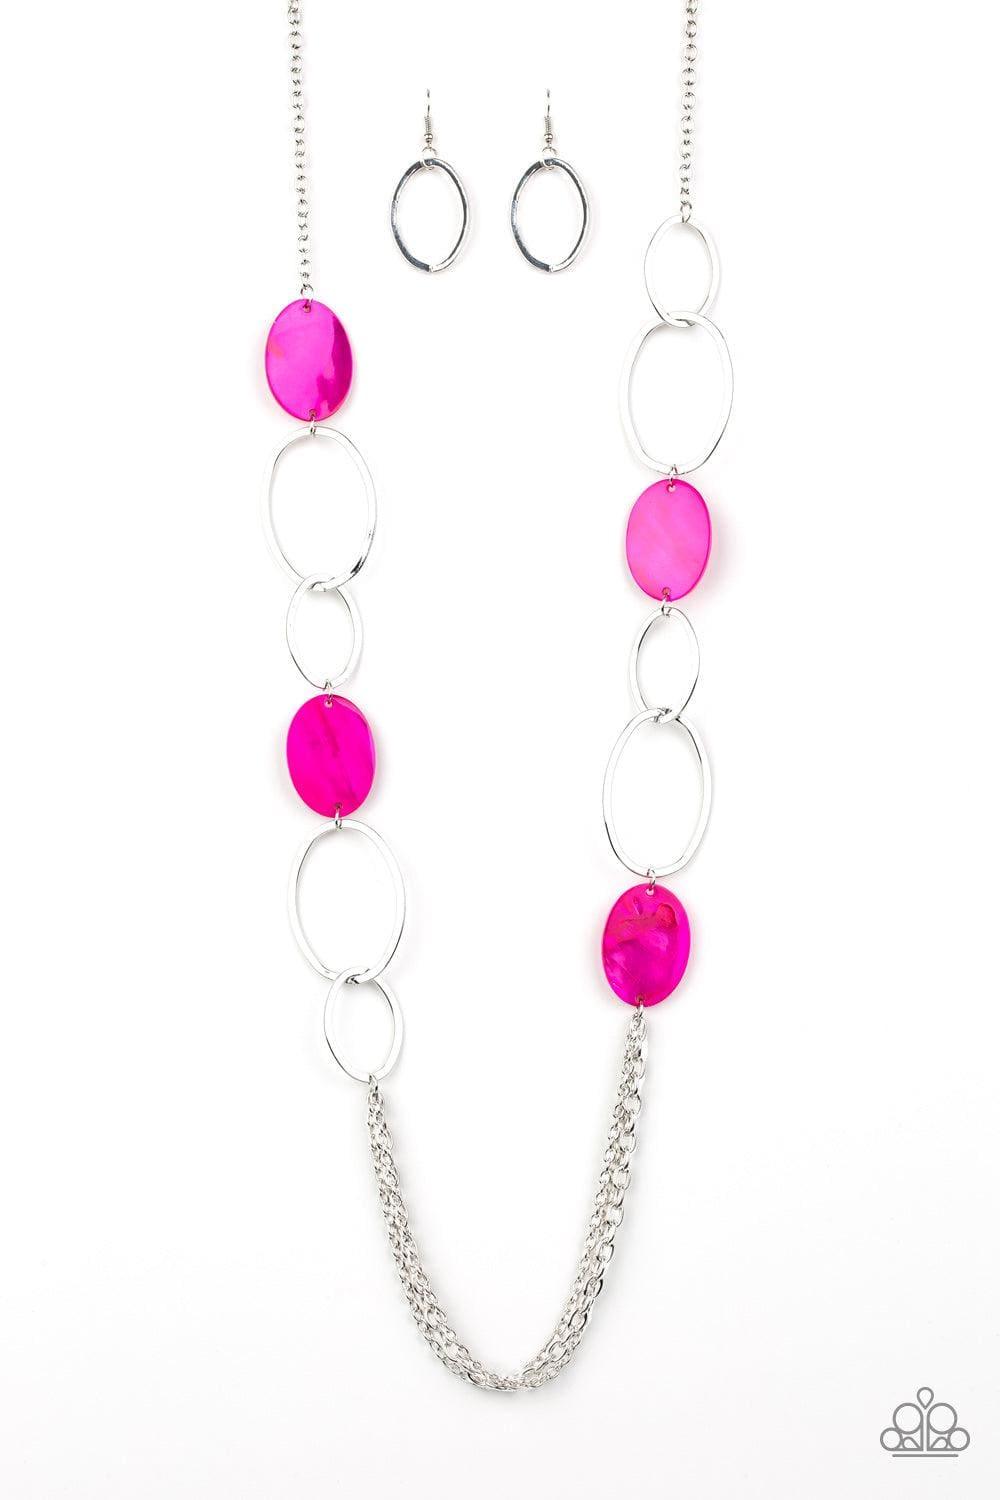 Paparazzi Accessories - Kaleidoscope Coasts - Pink Necklace - Bling by JessieK